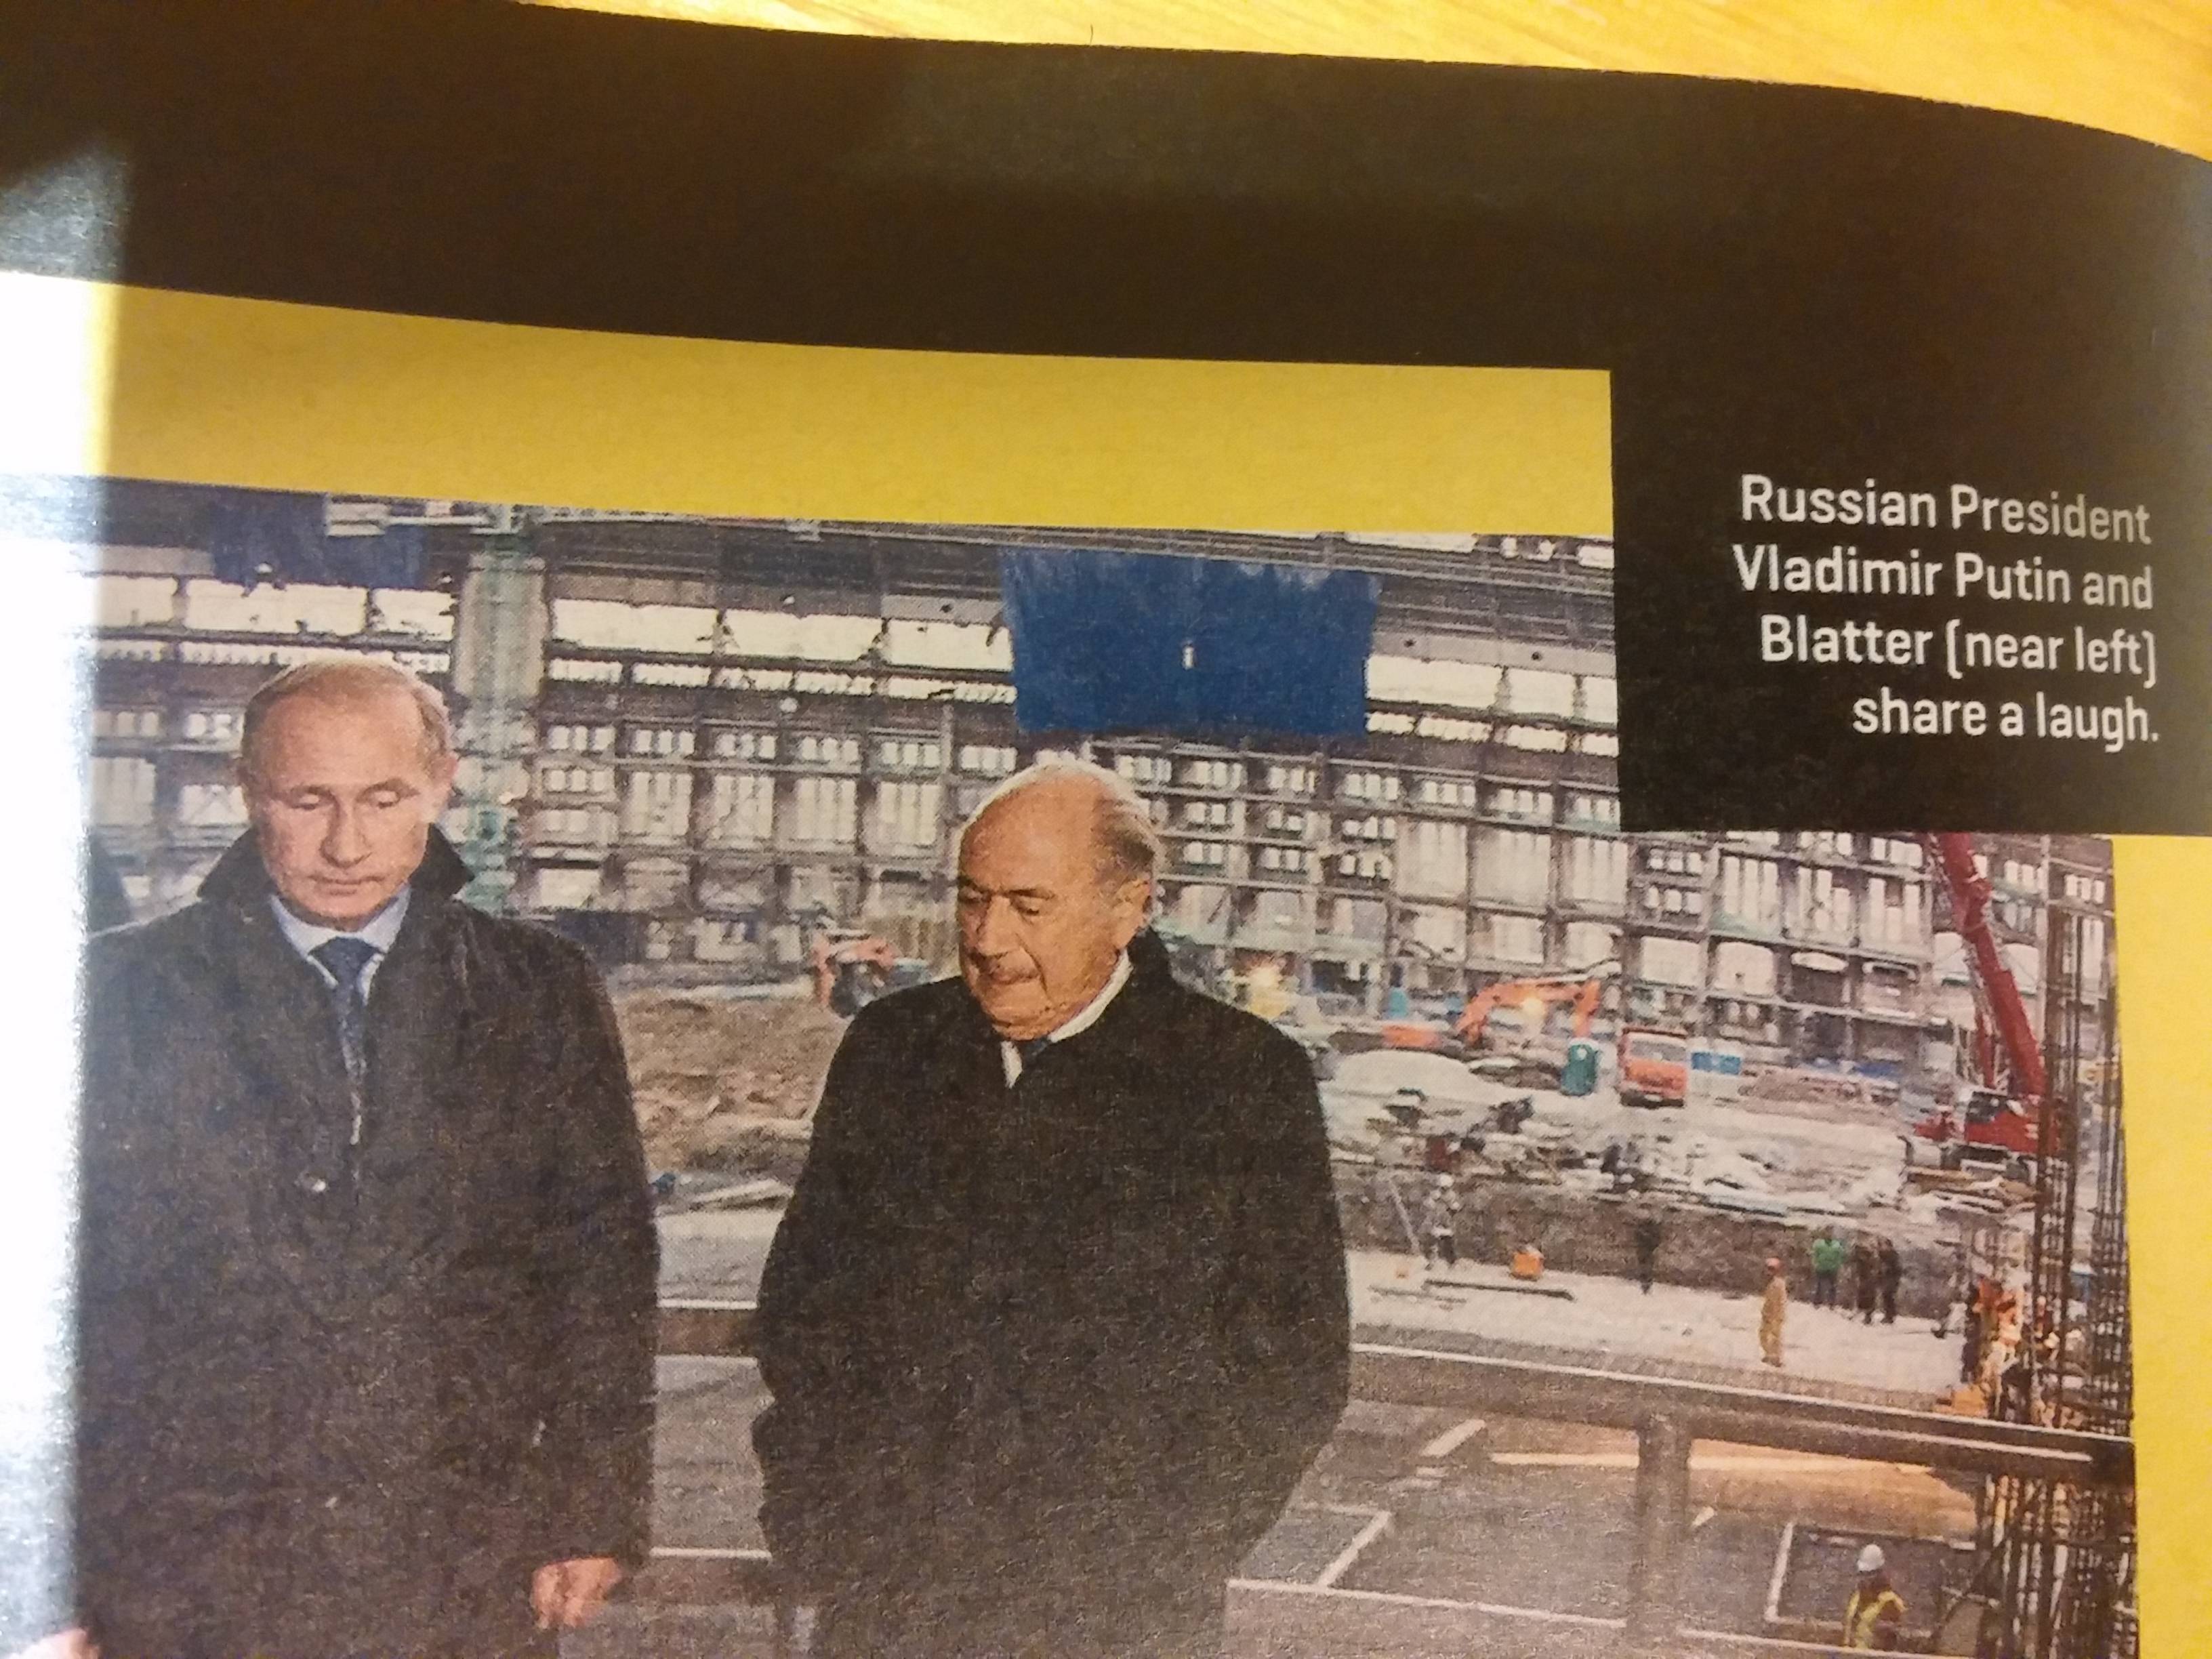 Russian President Vladimir Putin and Blatter near left a laugh